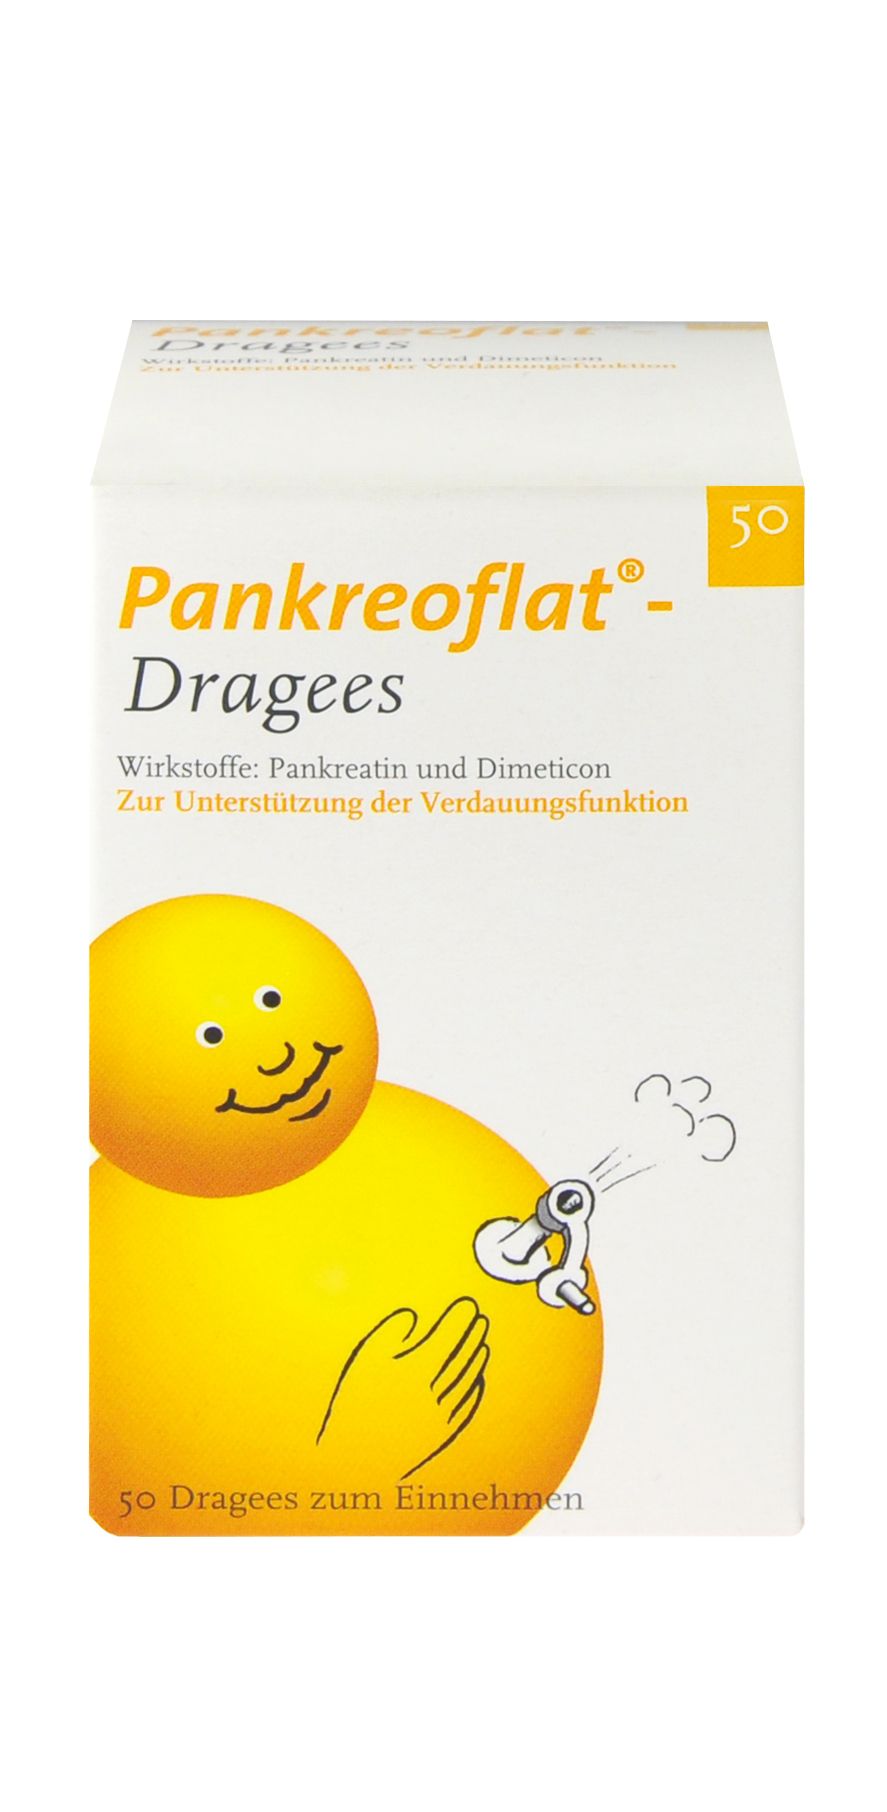 Abbildung Pankreoflat - Dragees